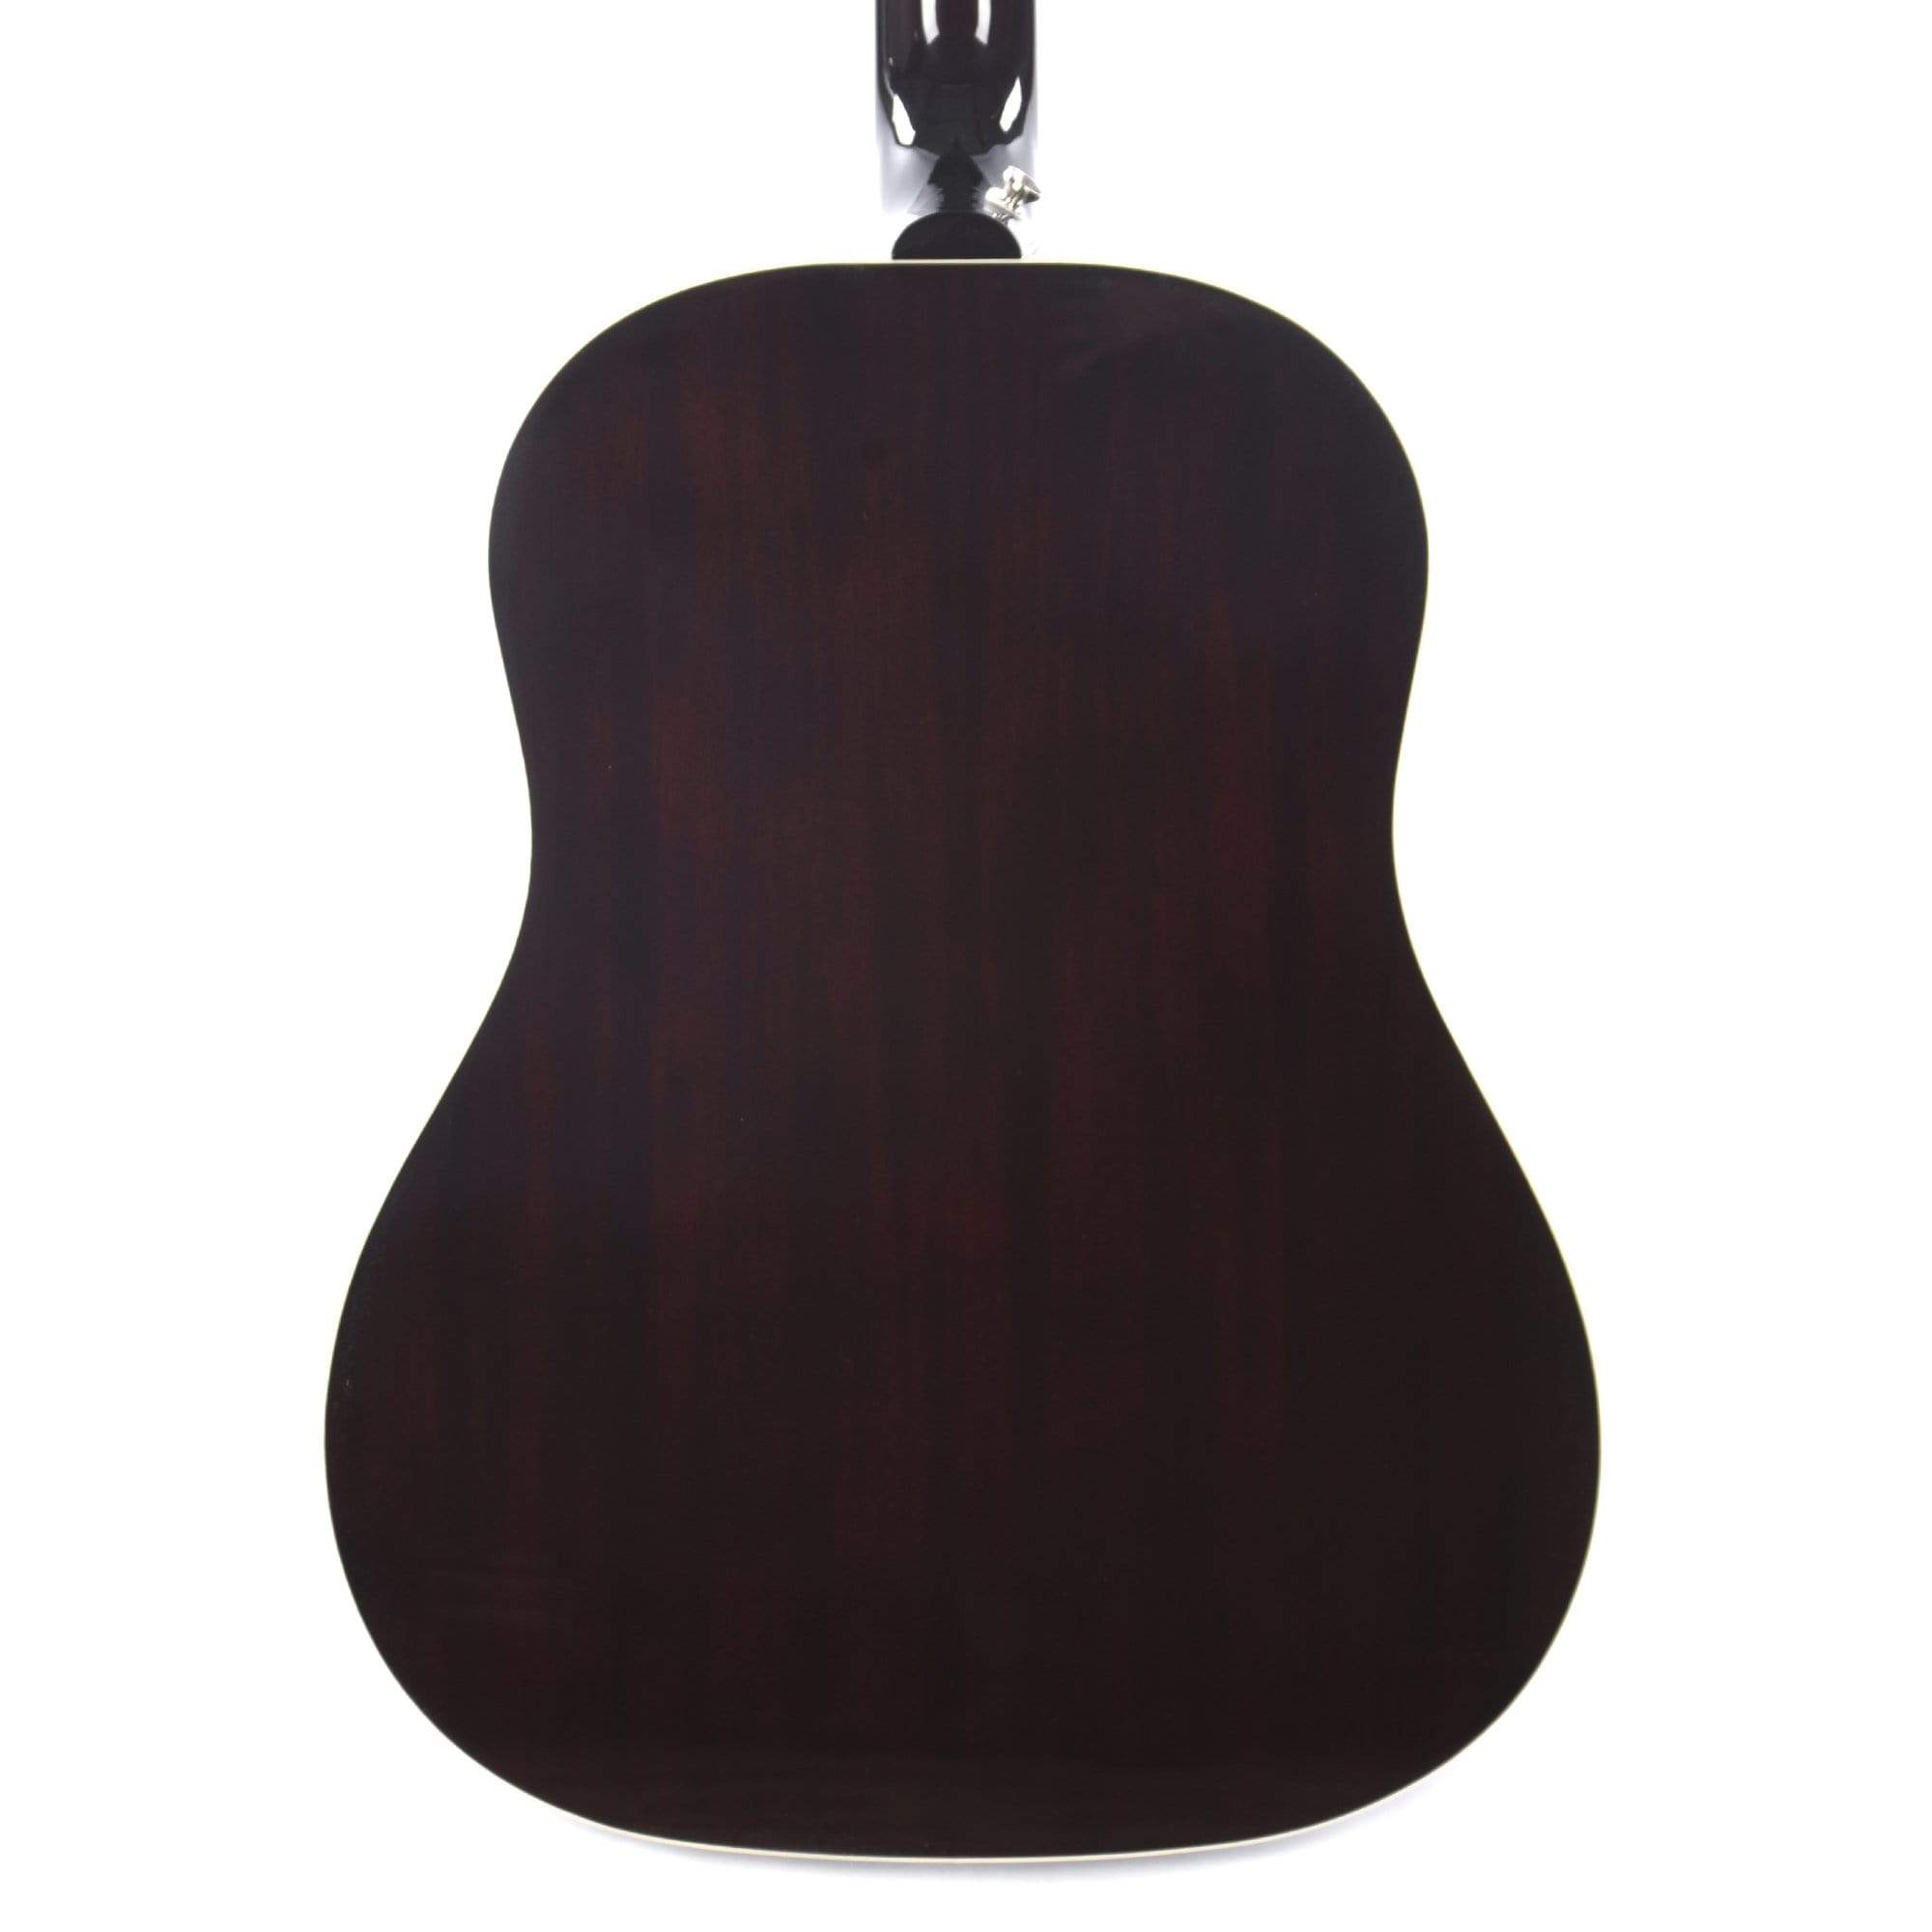 Gibson Montana J-45 Standard 2019 Vintage Sunburst LEFTY Acoustic Guitars / Left-Handed